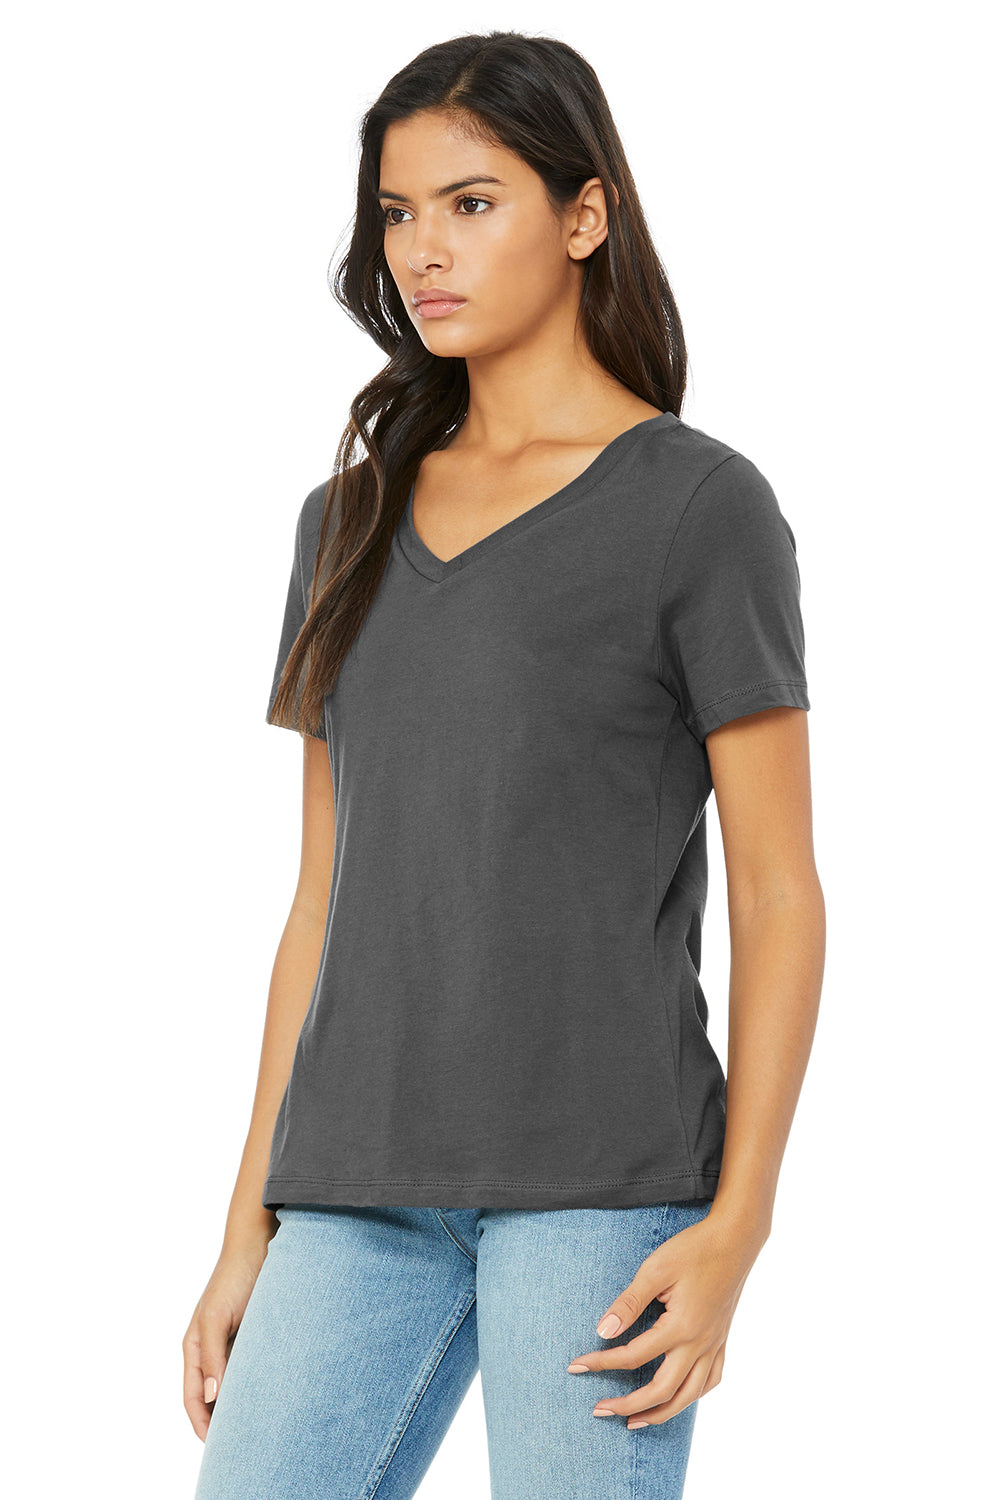 Bella + Canvas BC6405/6405 Womens Relaxed Jersey Short Sleeve V-Neck T-Shirt Asphalt Grey Model 3Q